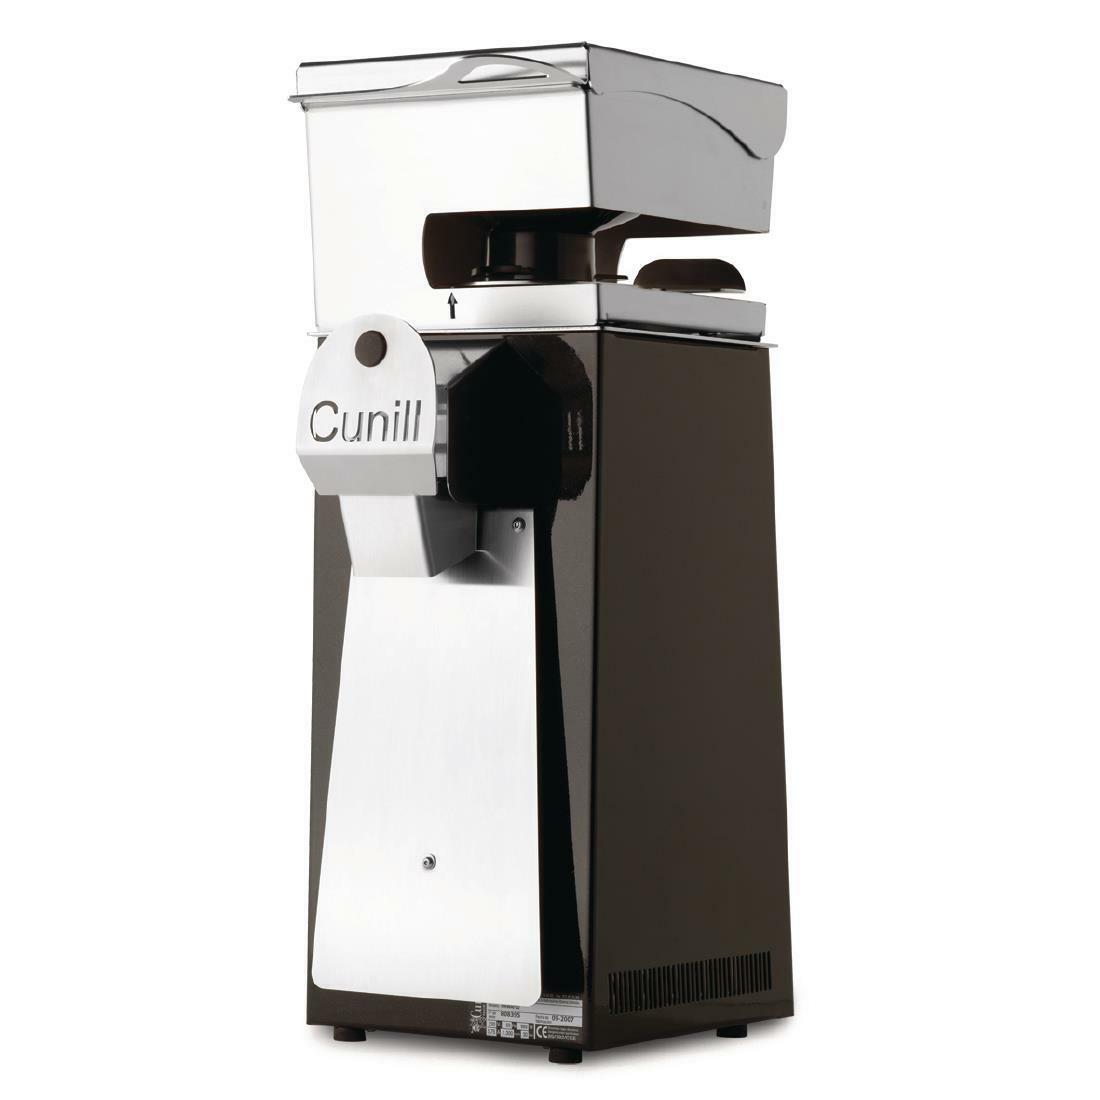 Fracino C6 Luxury Automatic Coffee Grinder